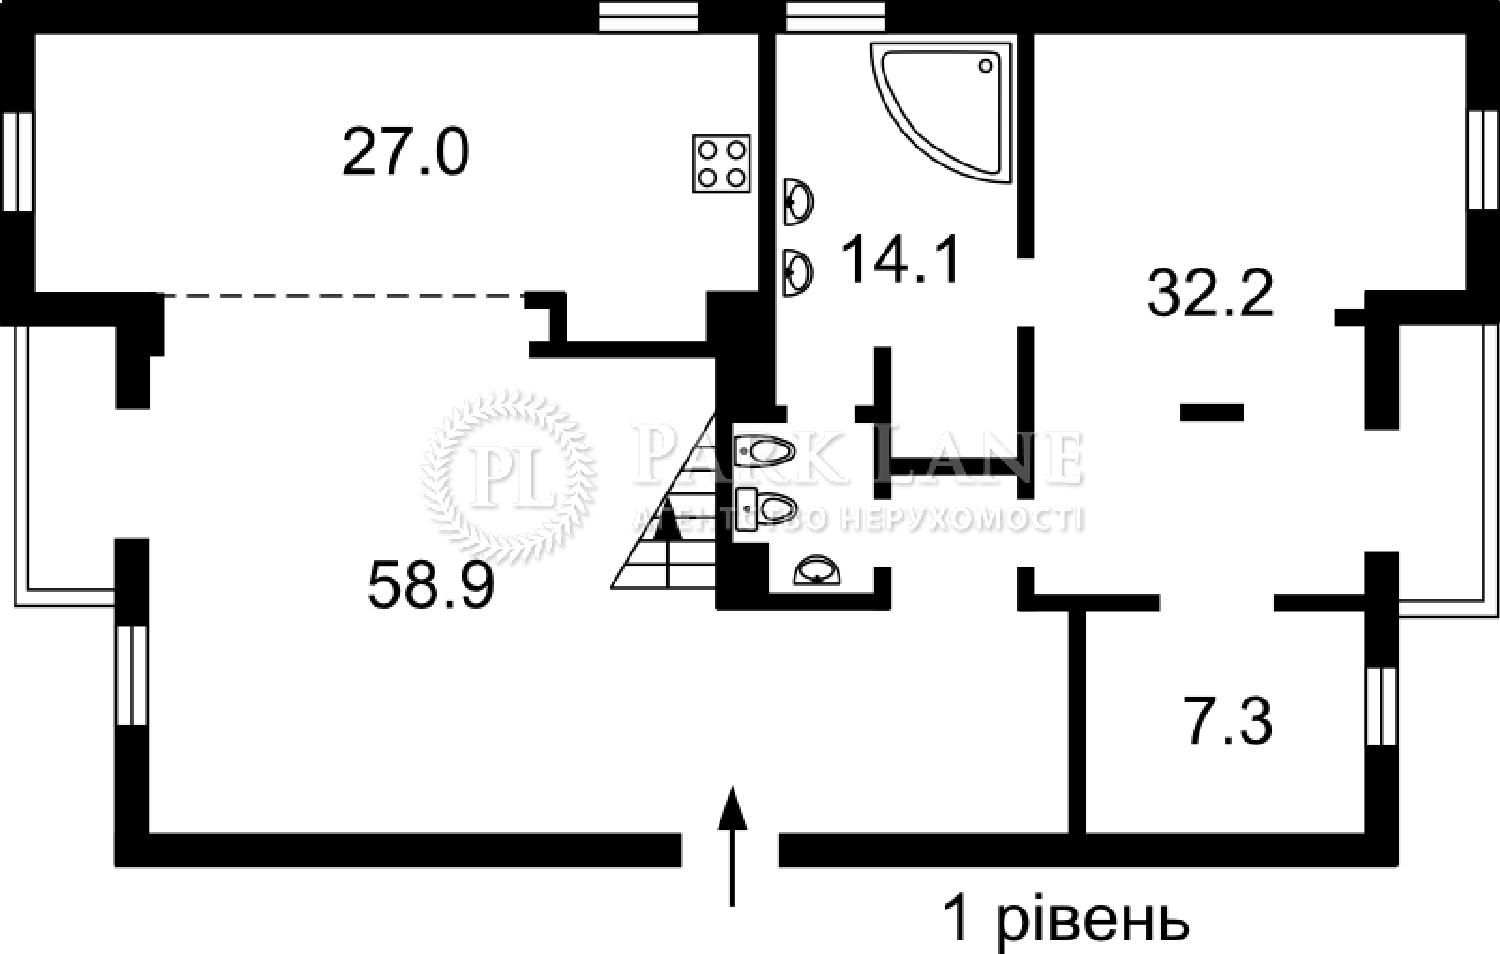 Квартира W-7210516, Богомольца Академика, 5, Киев - Фото 2